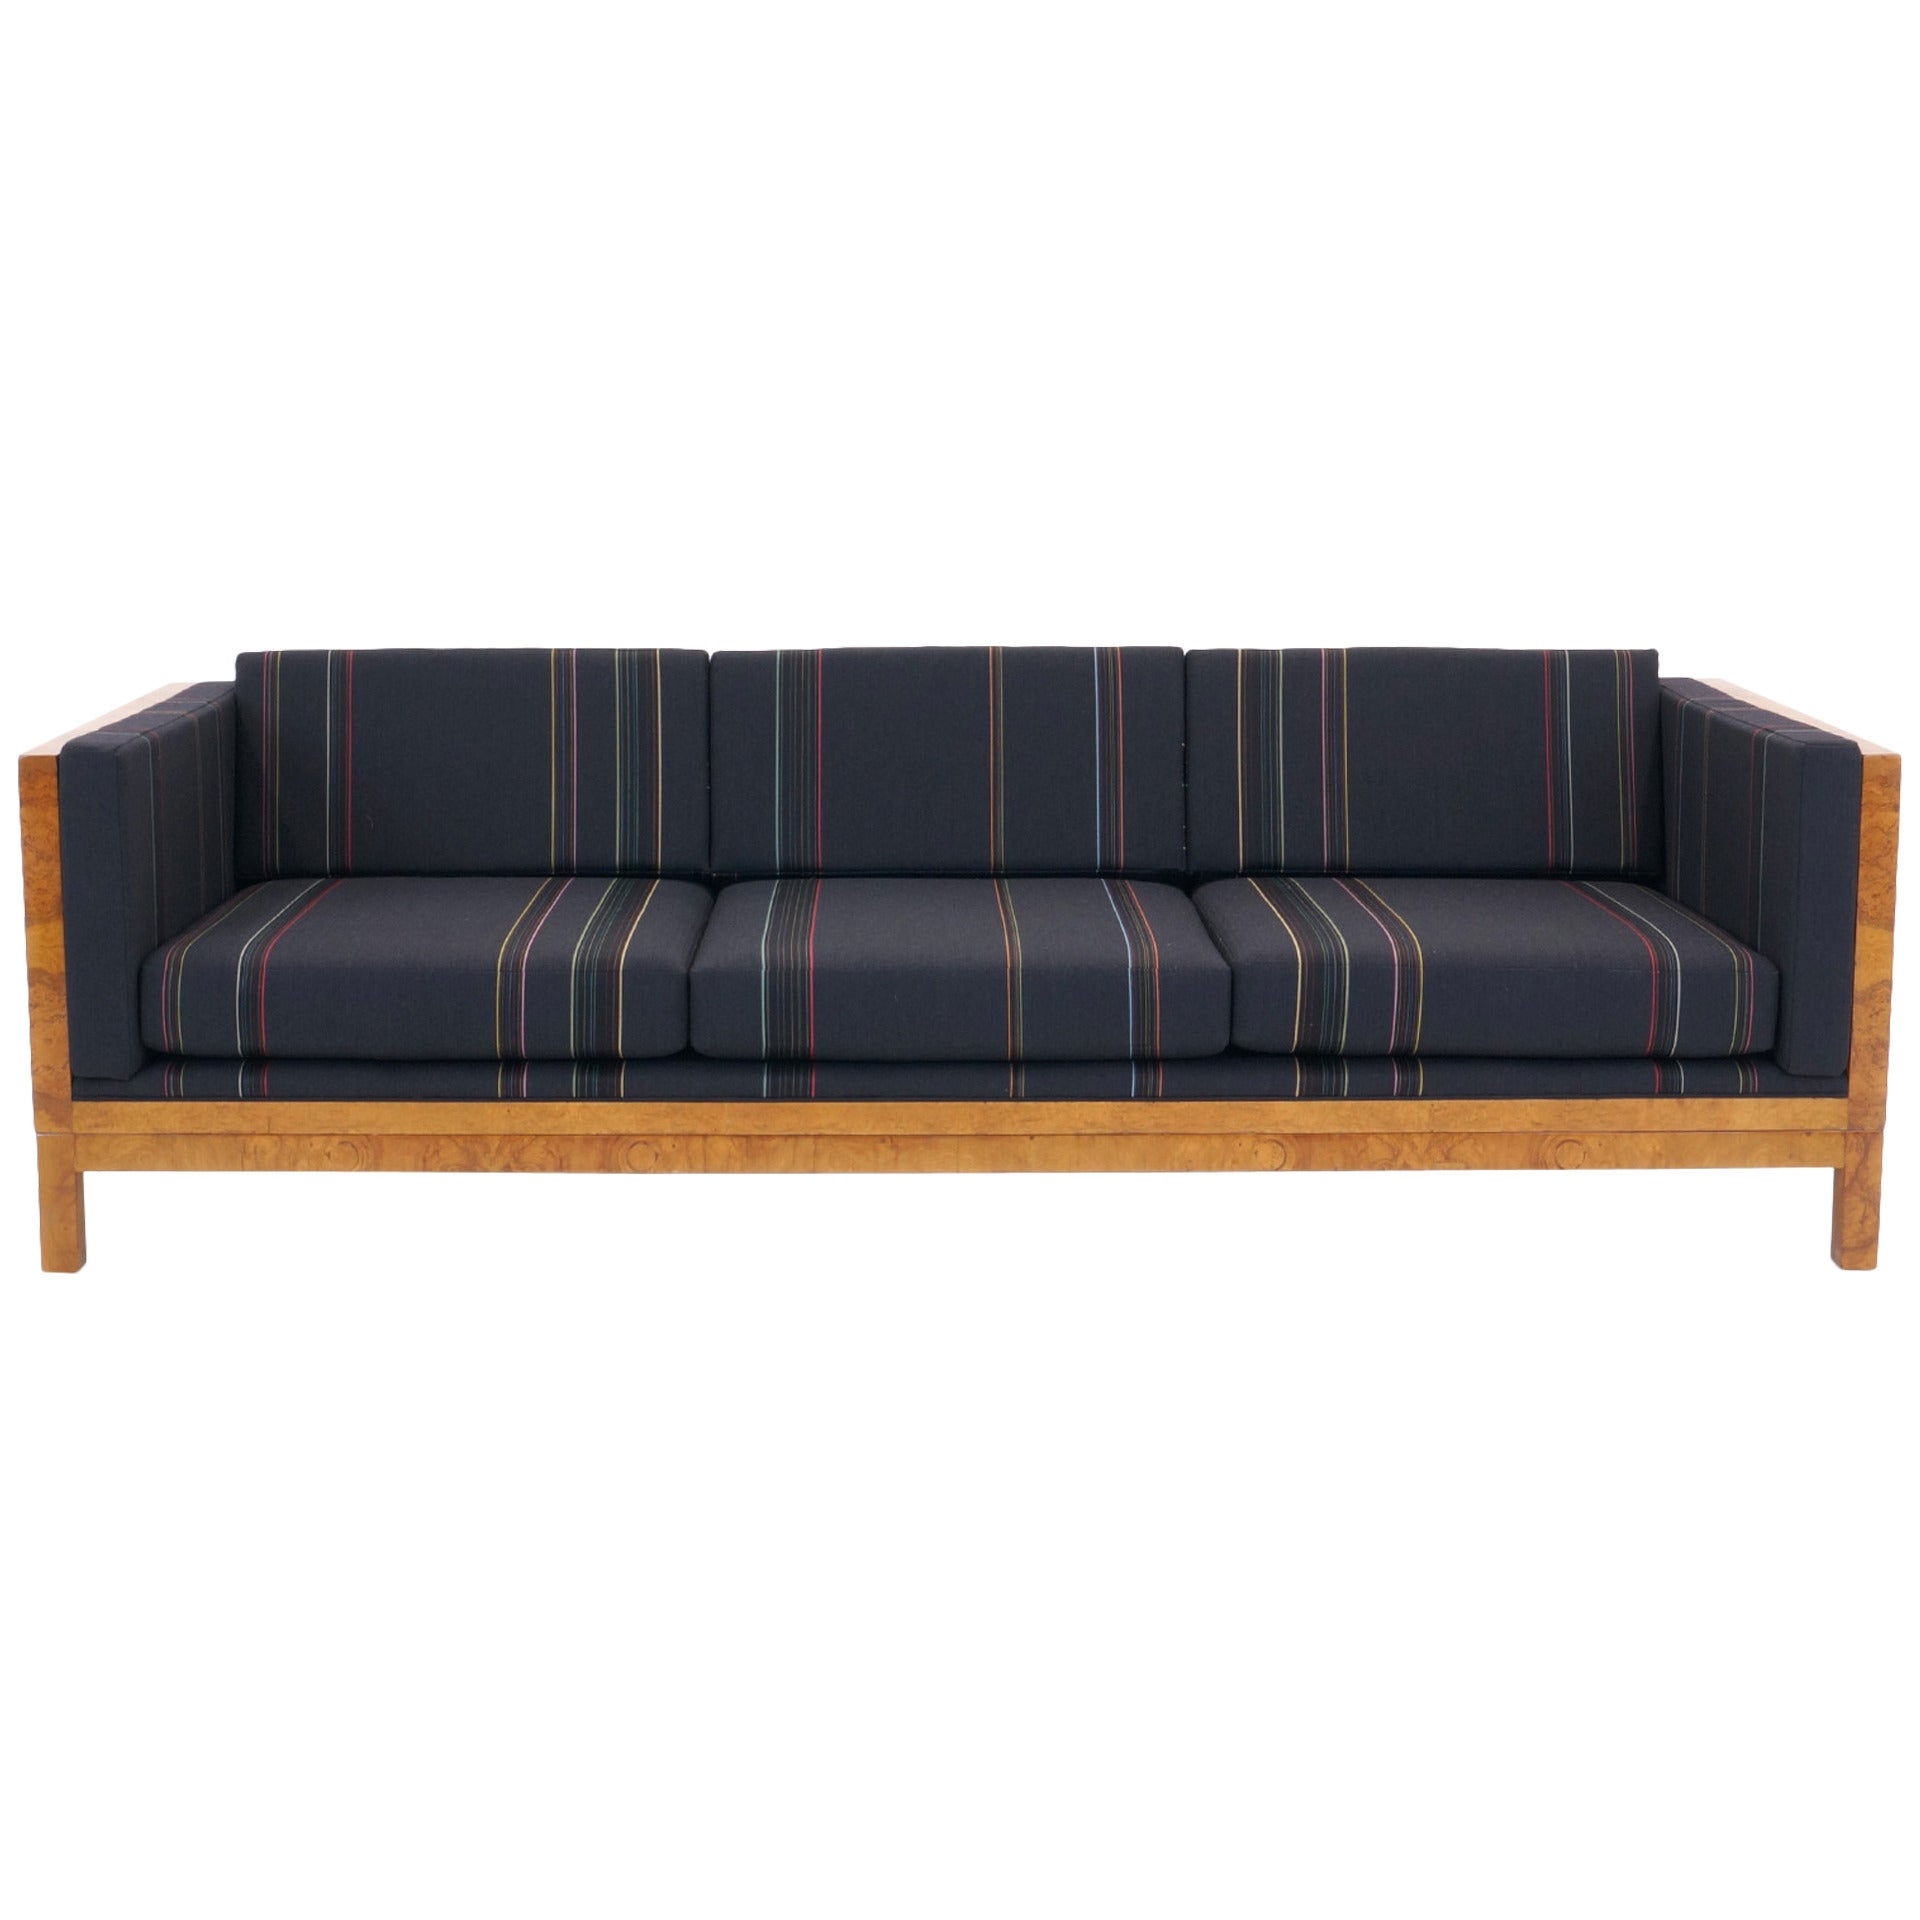 Milo Baughman Burl Wood Case Sofa Reupholstered in Paul Smith Fabric for Maharam